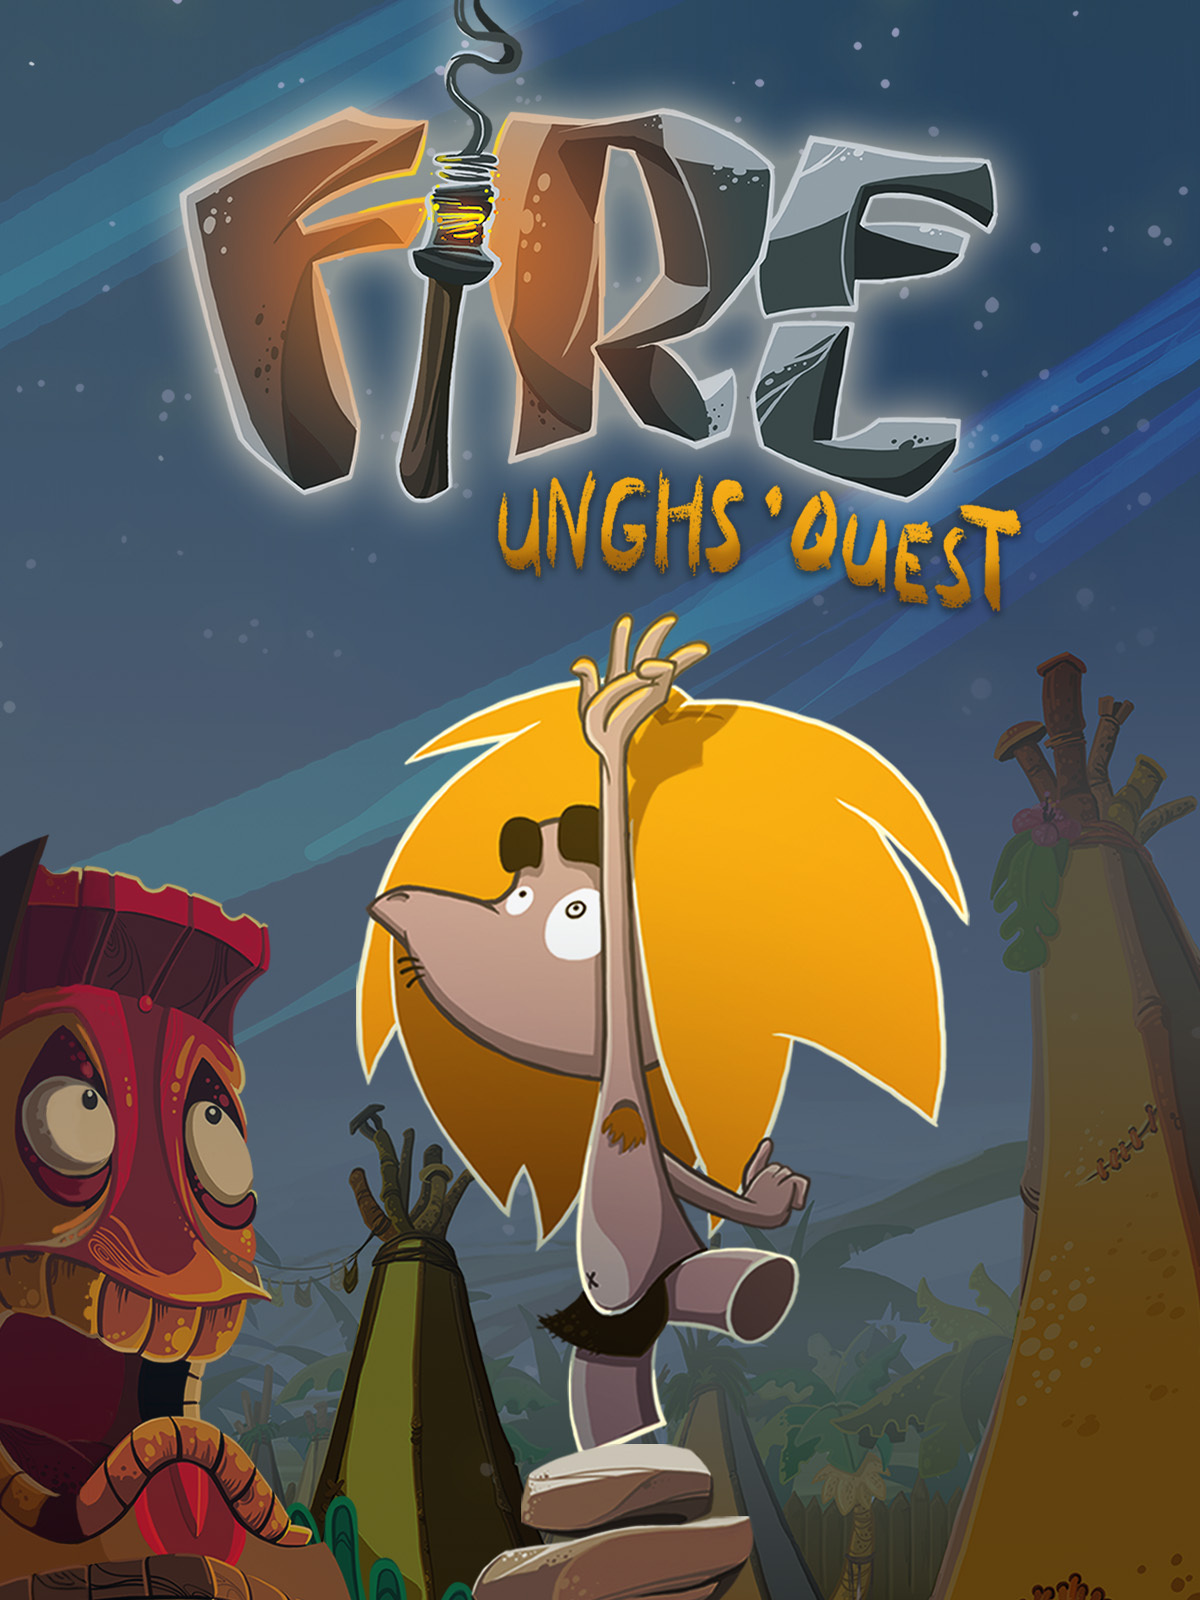 Fire: Ungh's Quest - Metacritic